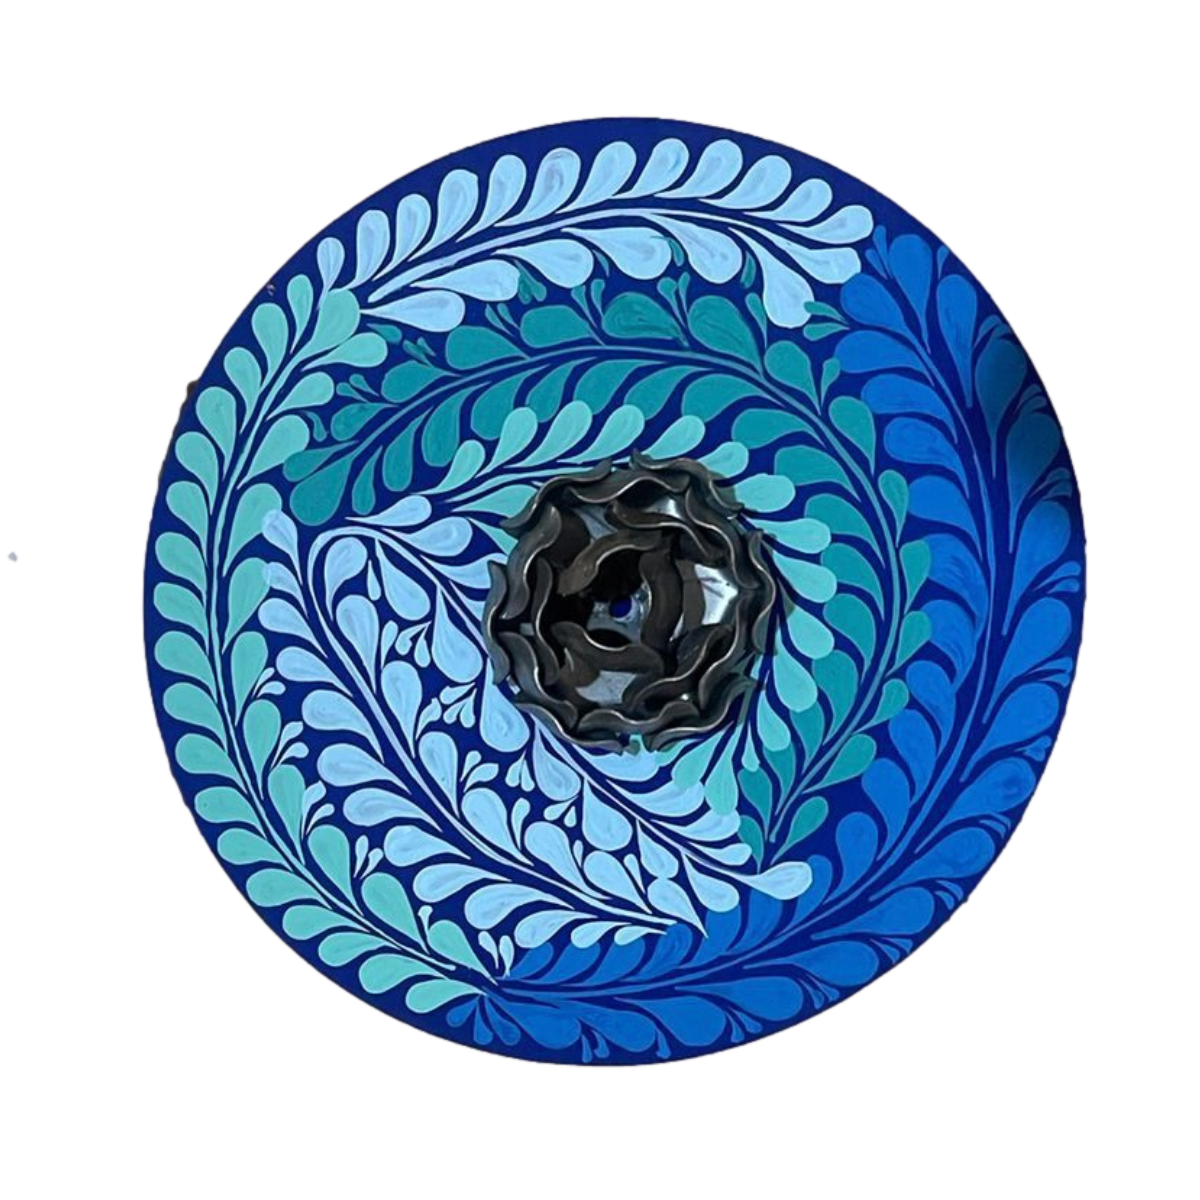 Mexican Handmade Parota Wood Tortilla Warmer & Charcuterie Board 2 Piece Set- Blue/Black Rose MeXican Artisan Fashion & Design